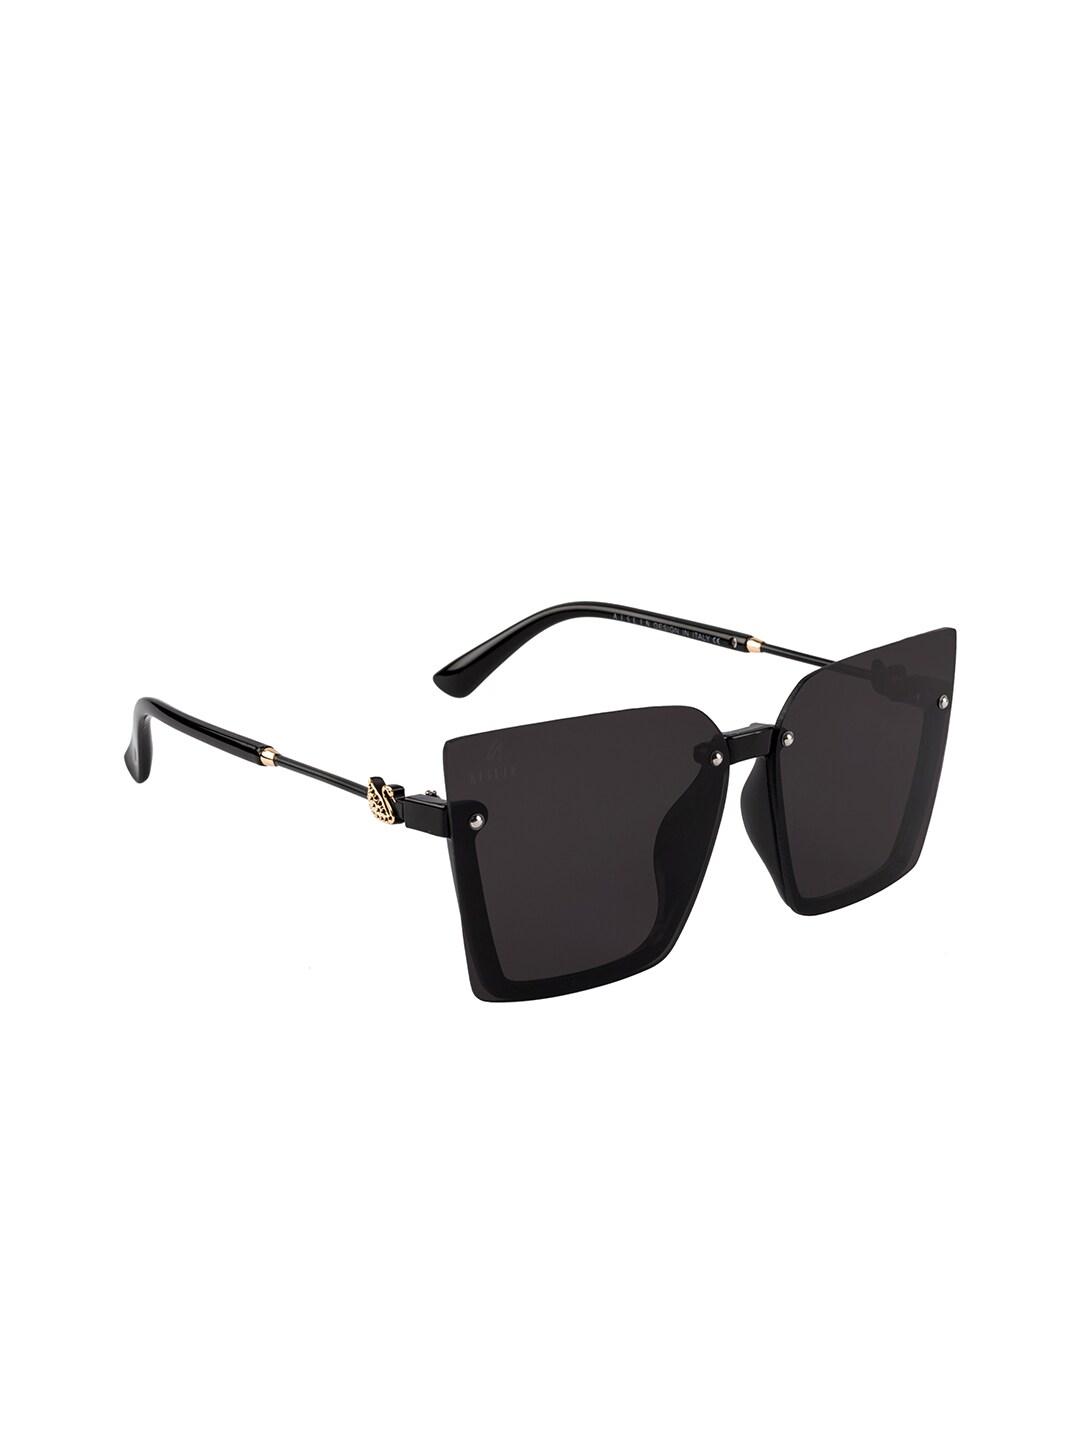 AISLIN Women Black Lens & Black Butterfly Sunglasses with UV Protected Lens